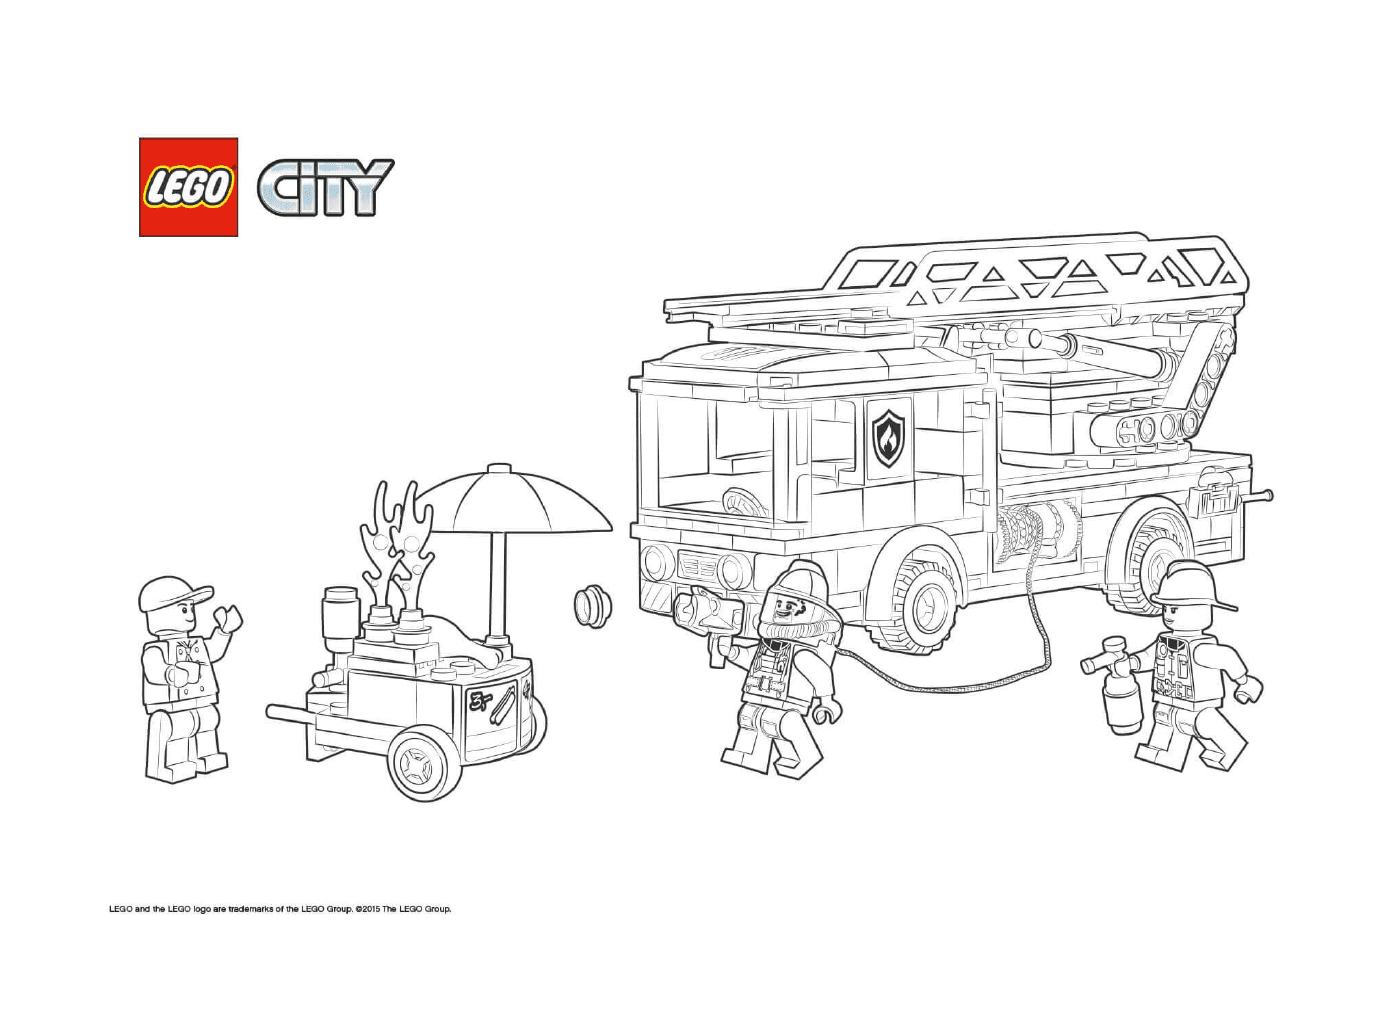  Lego City Vigili del Fuoco 